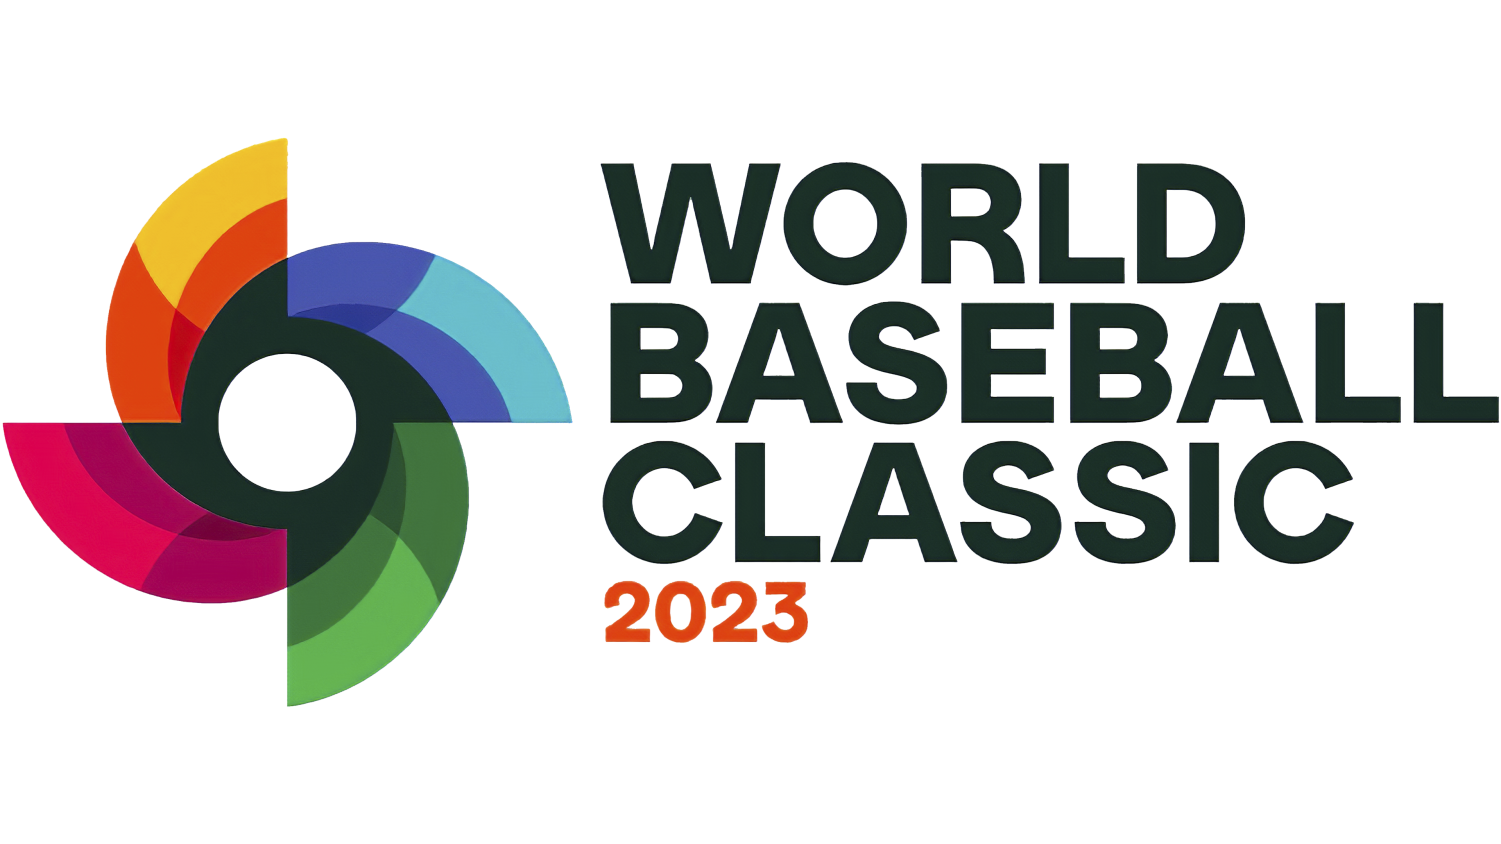 Team USA to Open World Baseball Classic Title Defense in Phoenix